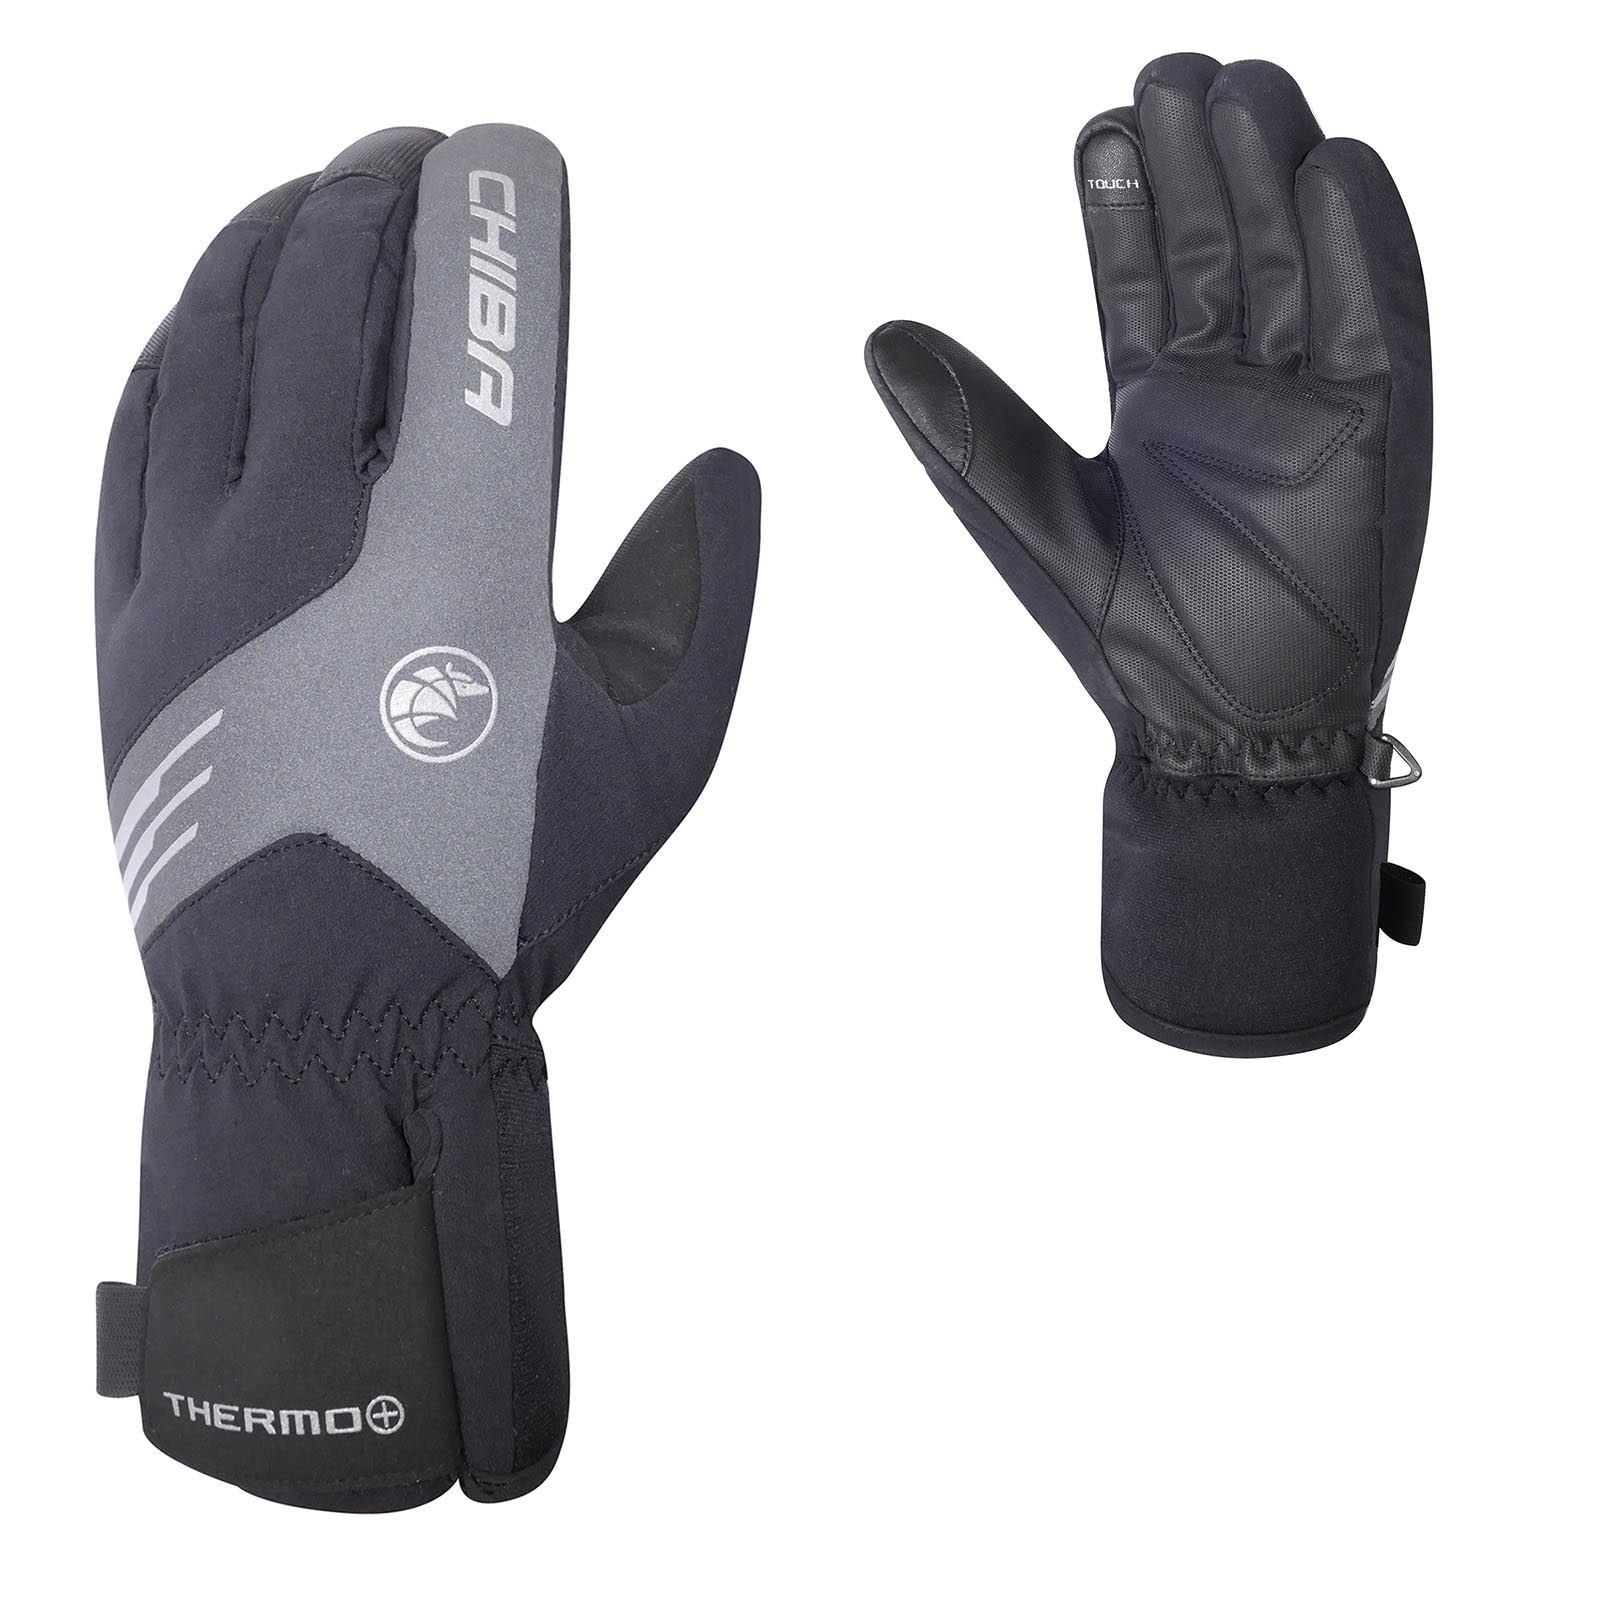 CHIBA Handschuhe Winter Thermo Plus schwarz Gr. L